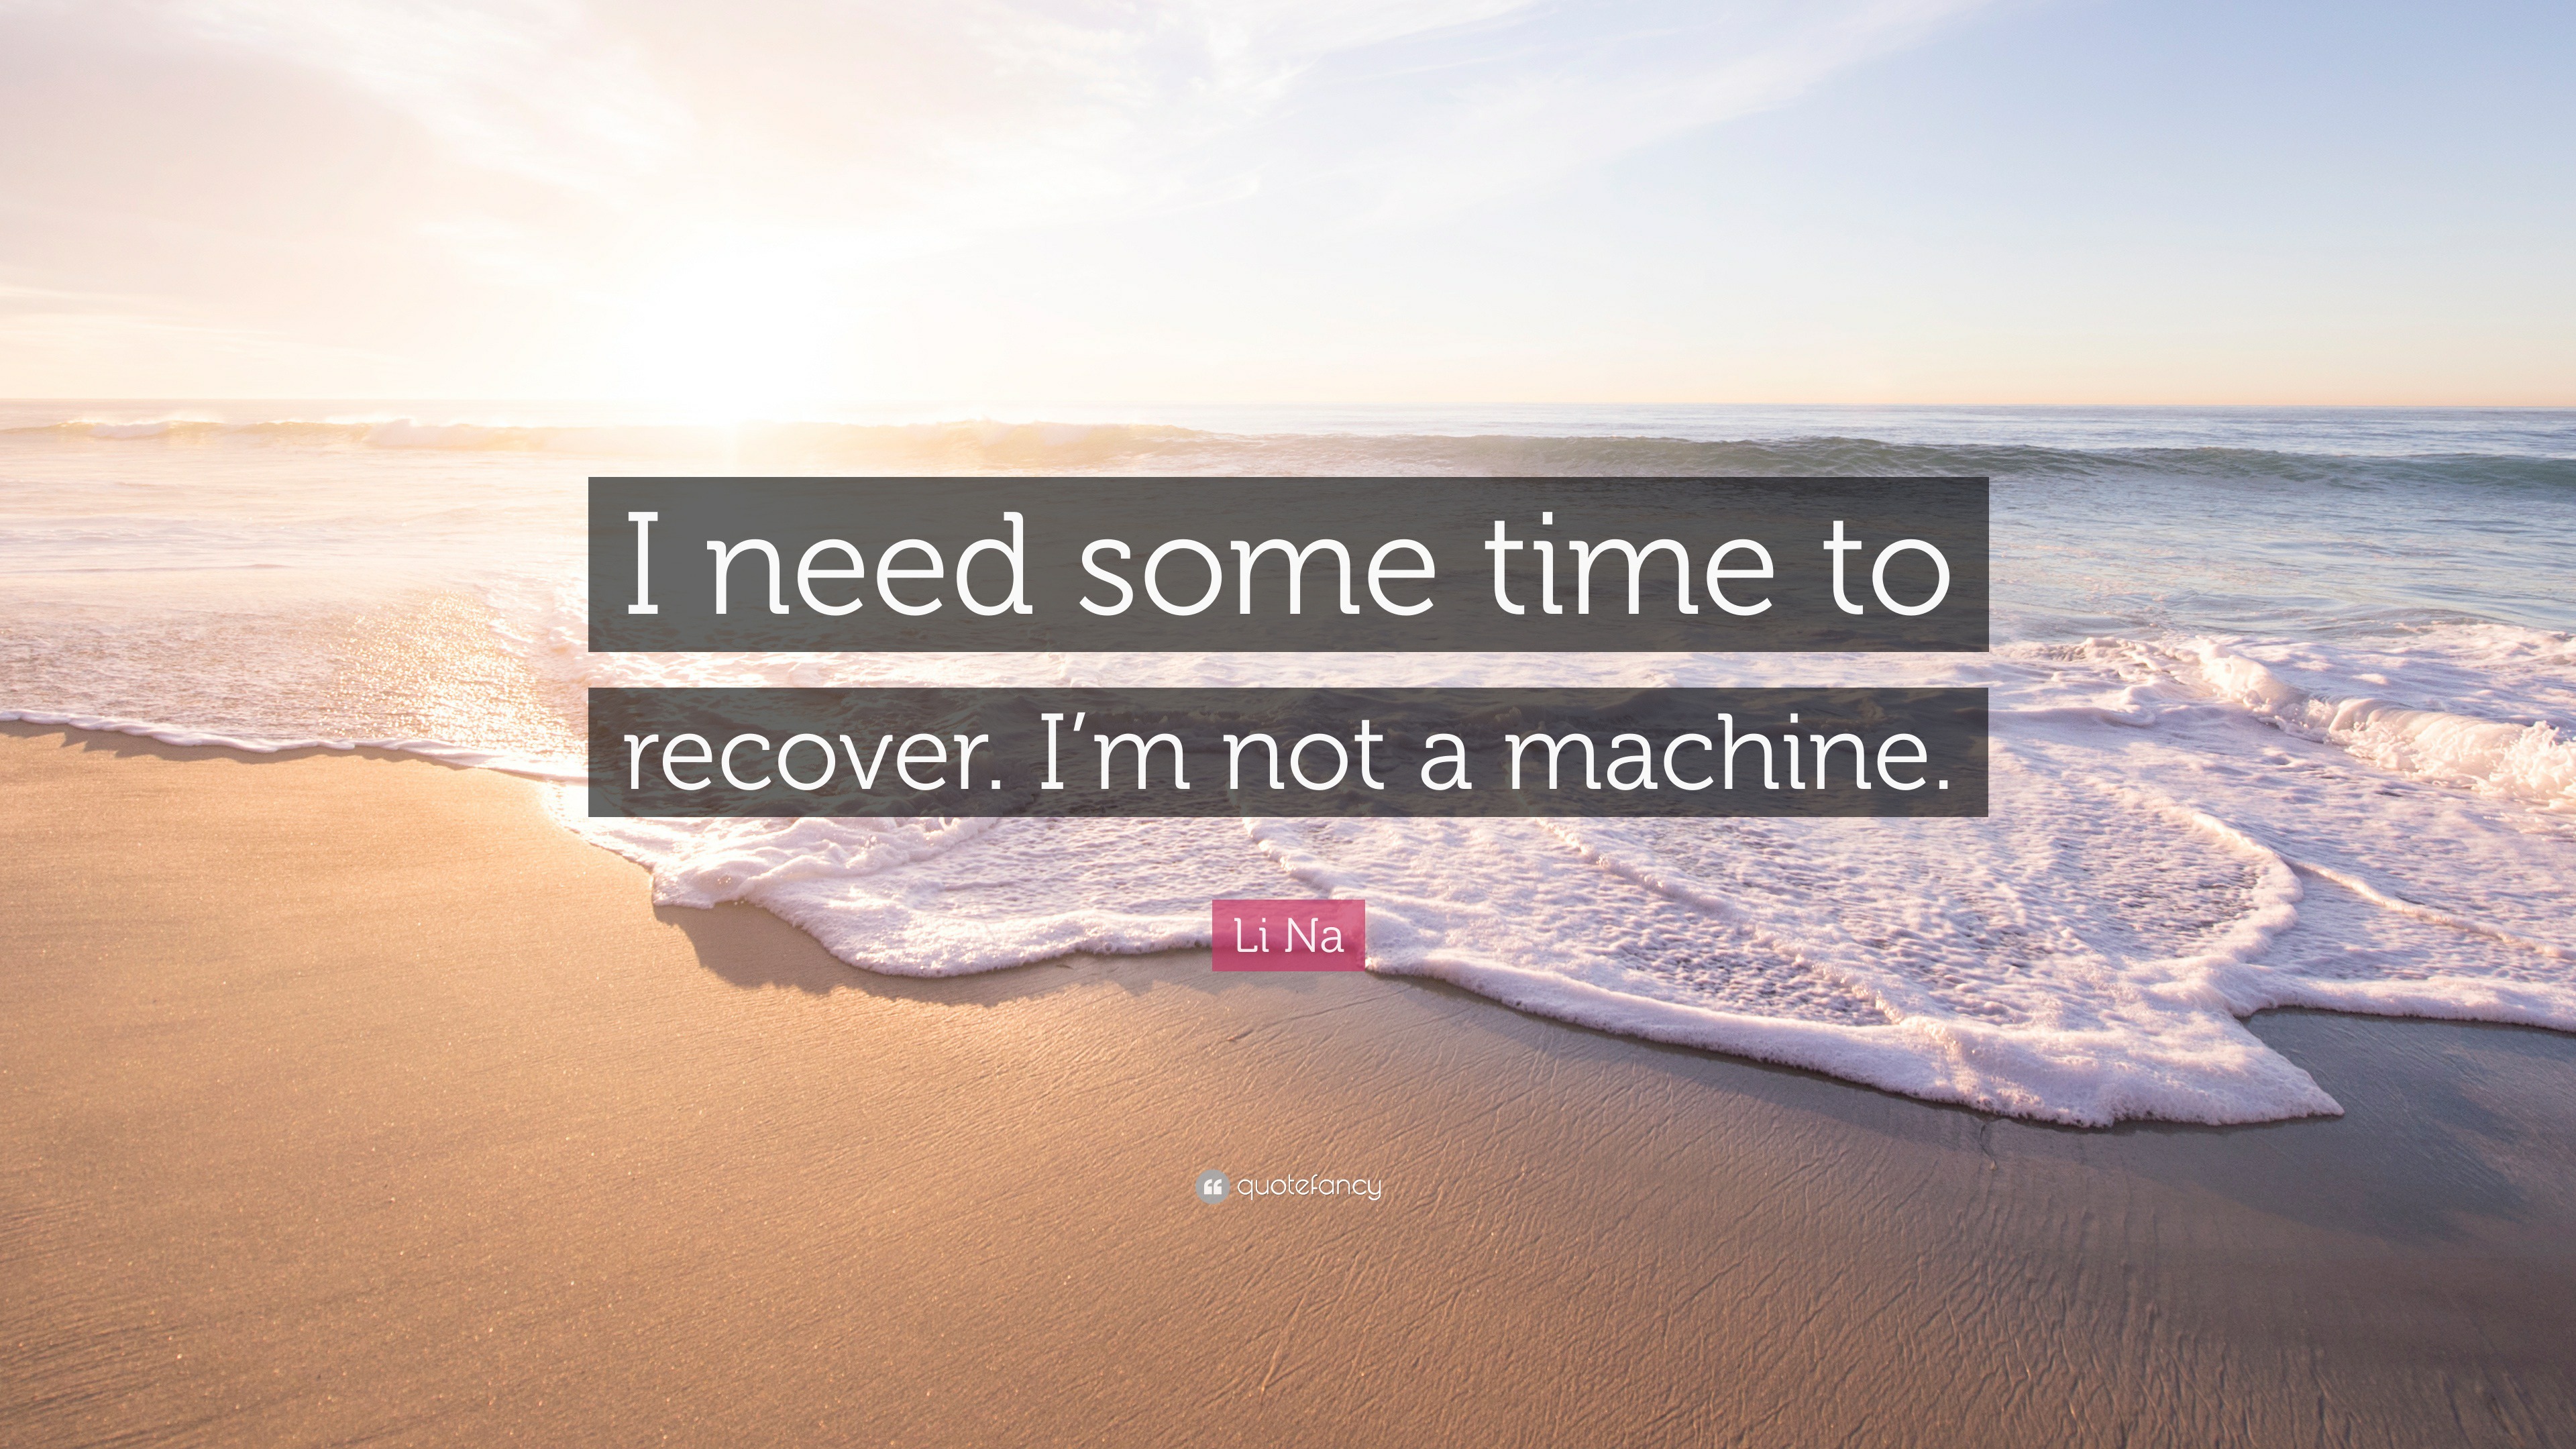 Li Na “I need some time recover. I'm a machine.”